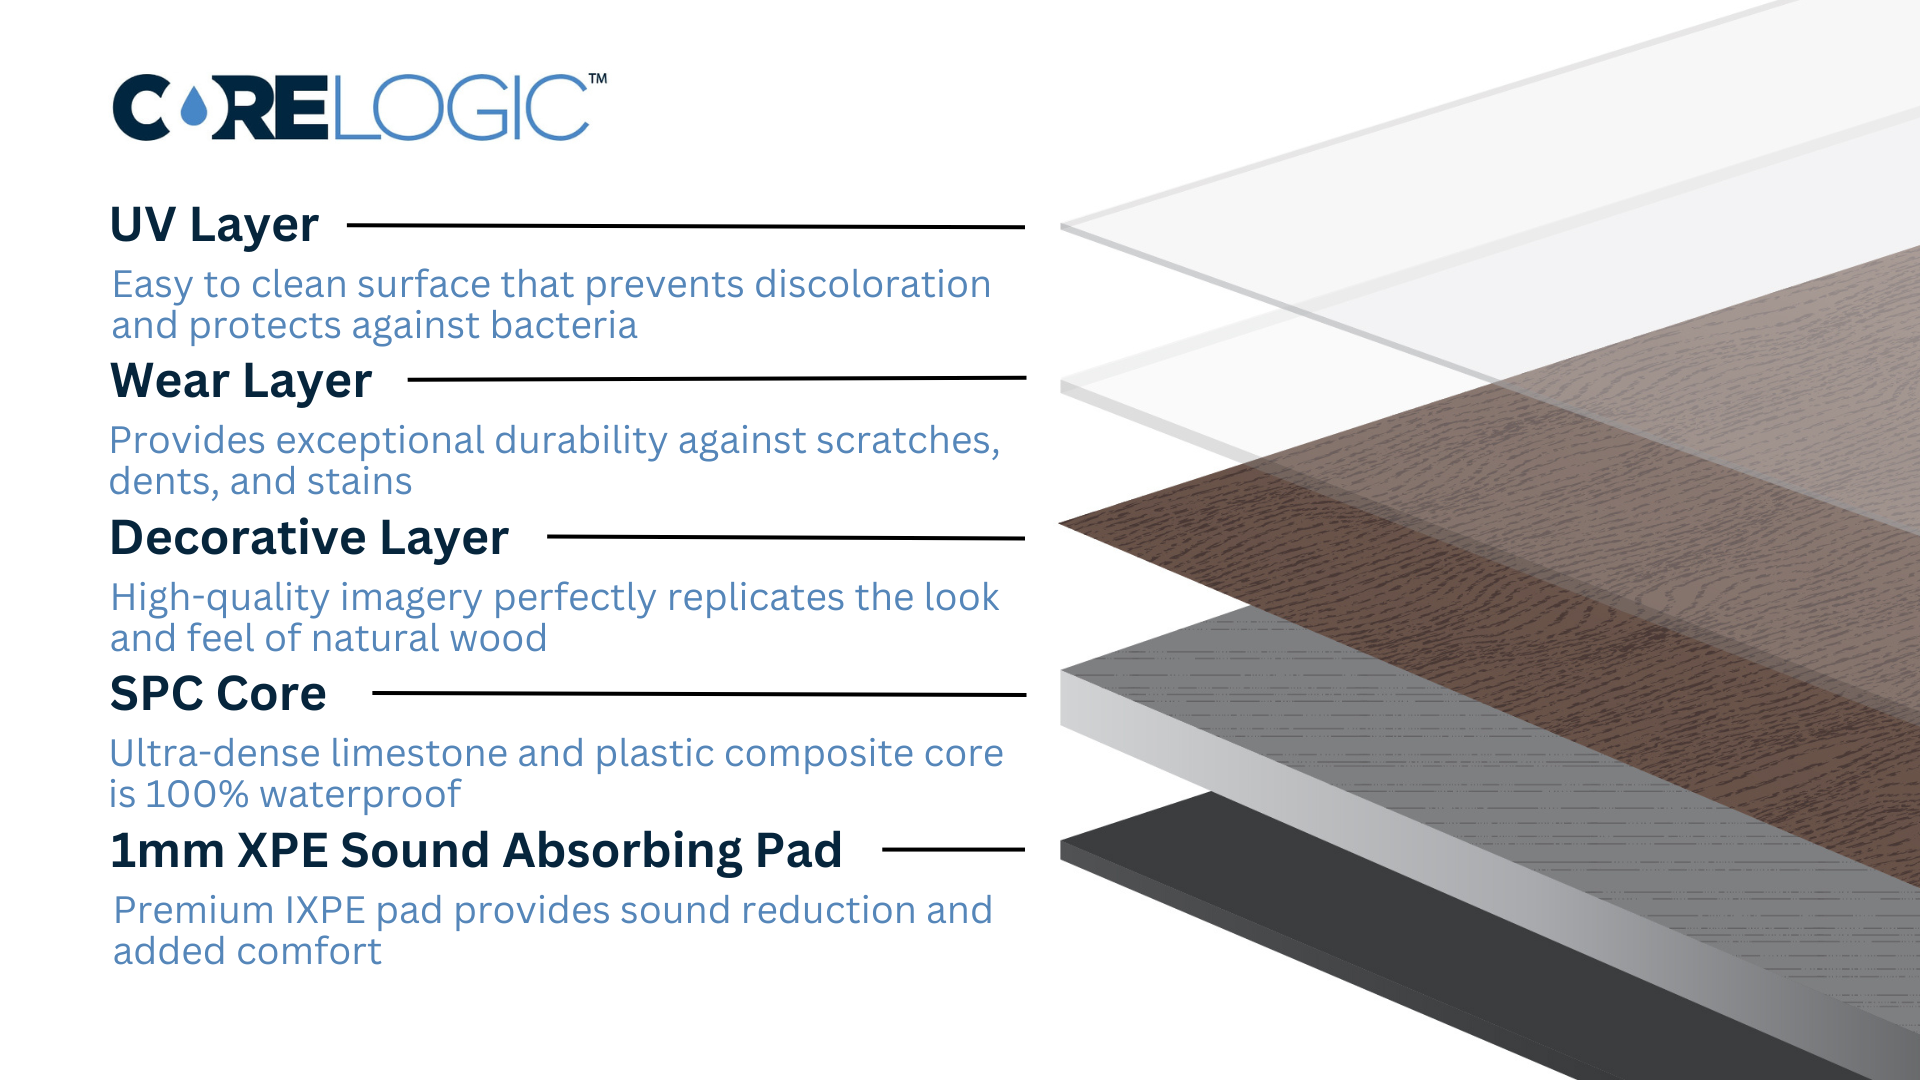 CoreLogic Luxury Vinyl Plank LVP Flooring Construction Layers